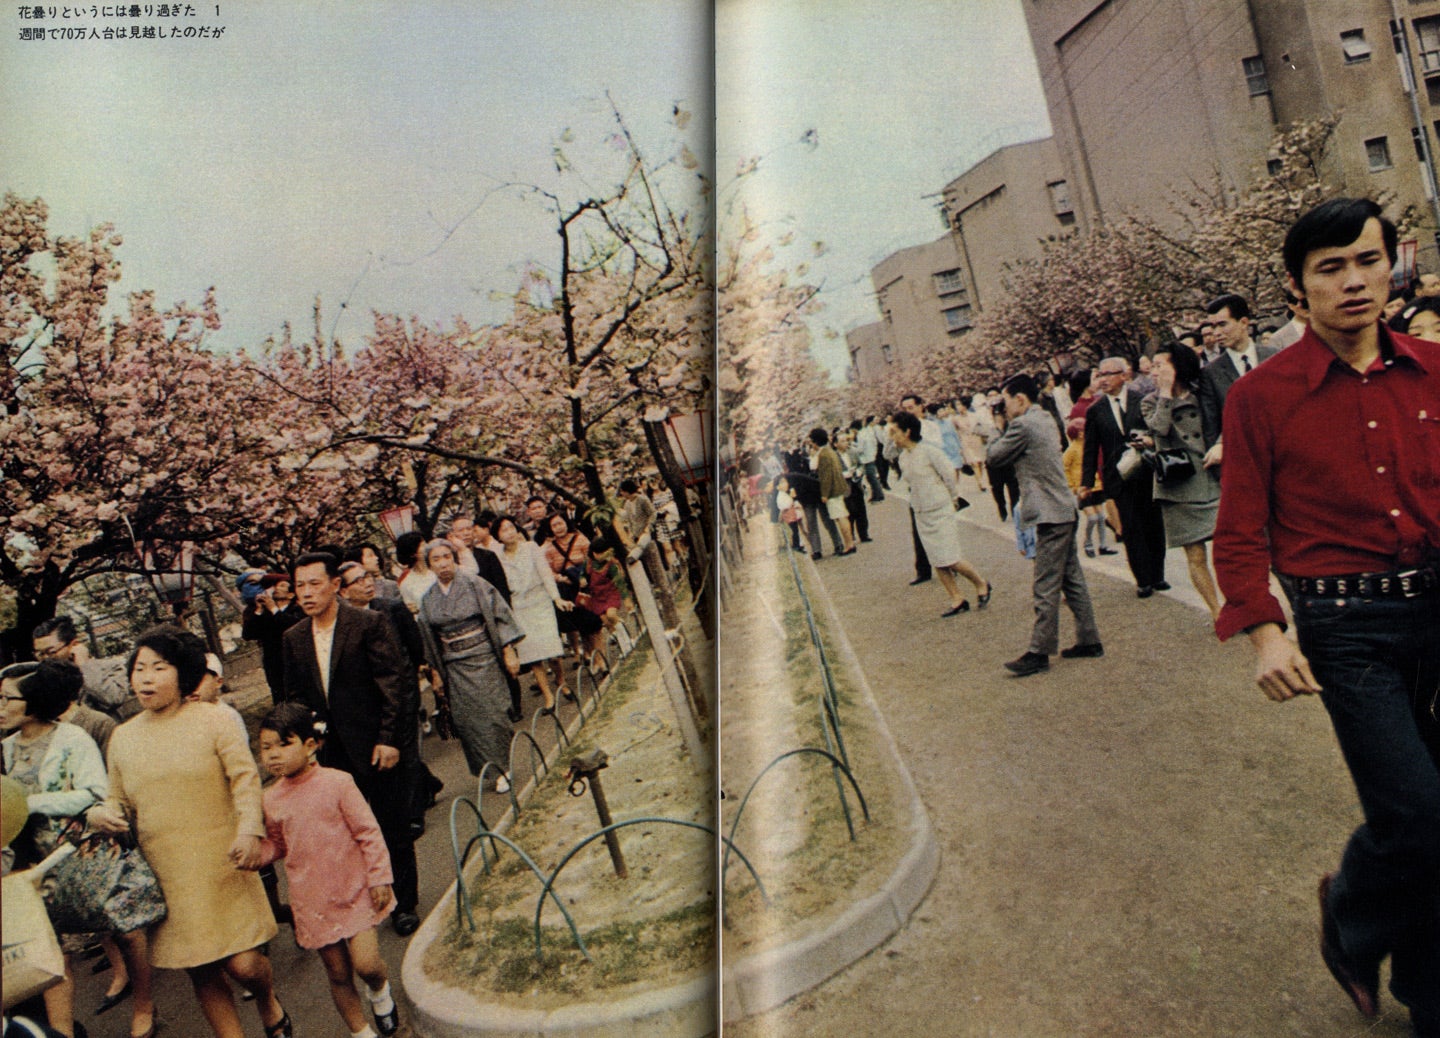 Daido Moriyama: Magazine Work (Two Volumes) from Camera Mainichi and Asahi Camera: Volume One: 1965-1970, Nippon Gekijo Shashincho (Japan, a Photo Theater) & Volume Two: 1971-1974, Nanika e no tabi (A Journey to Something), 1971-1974